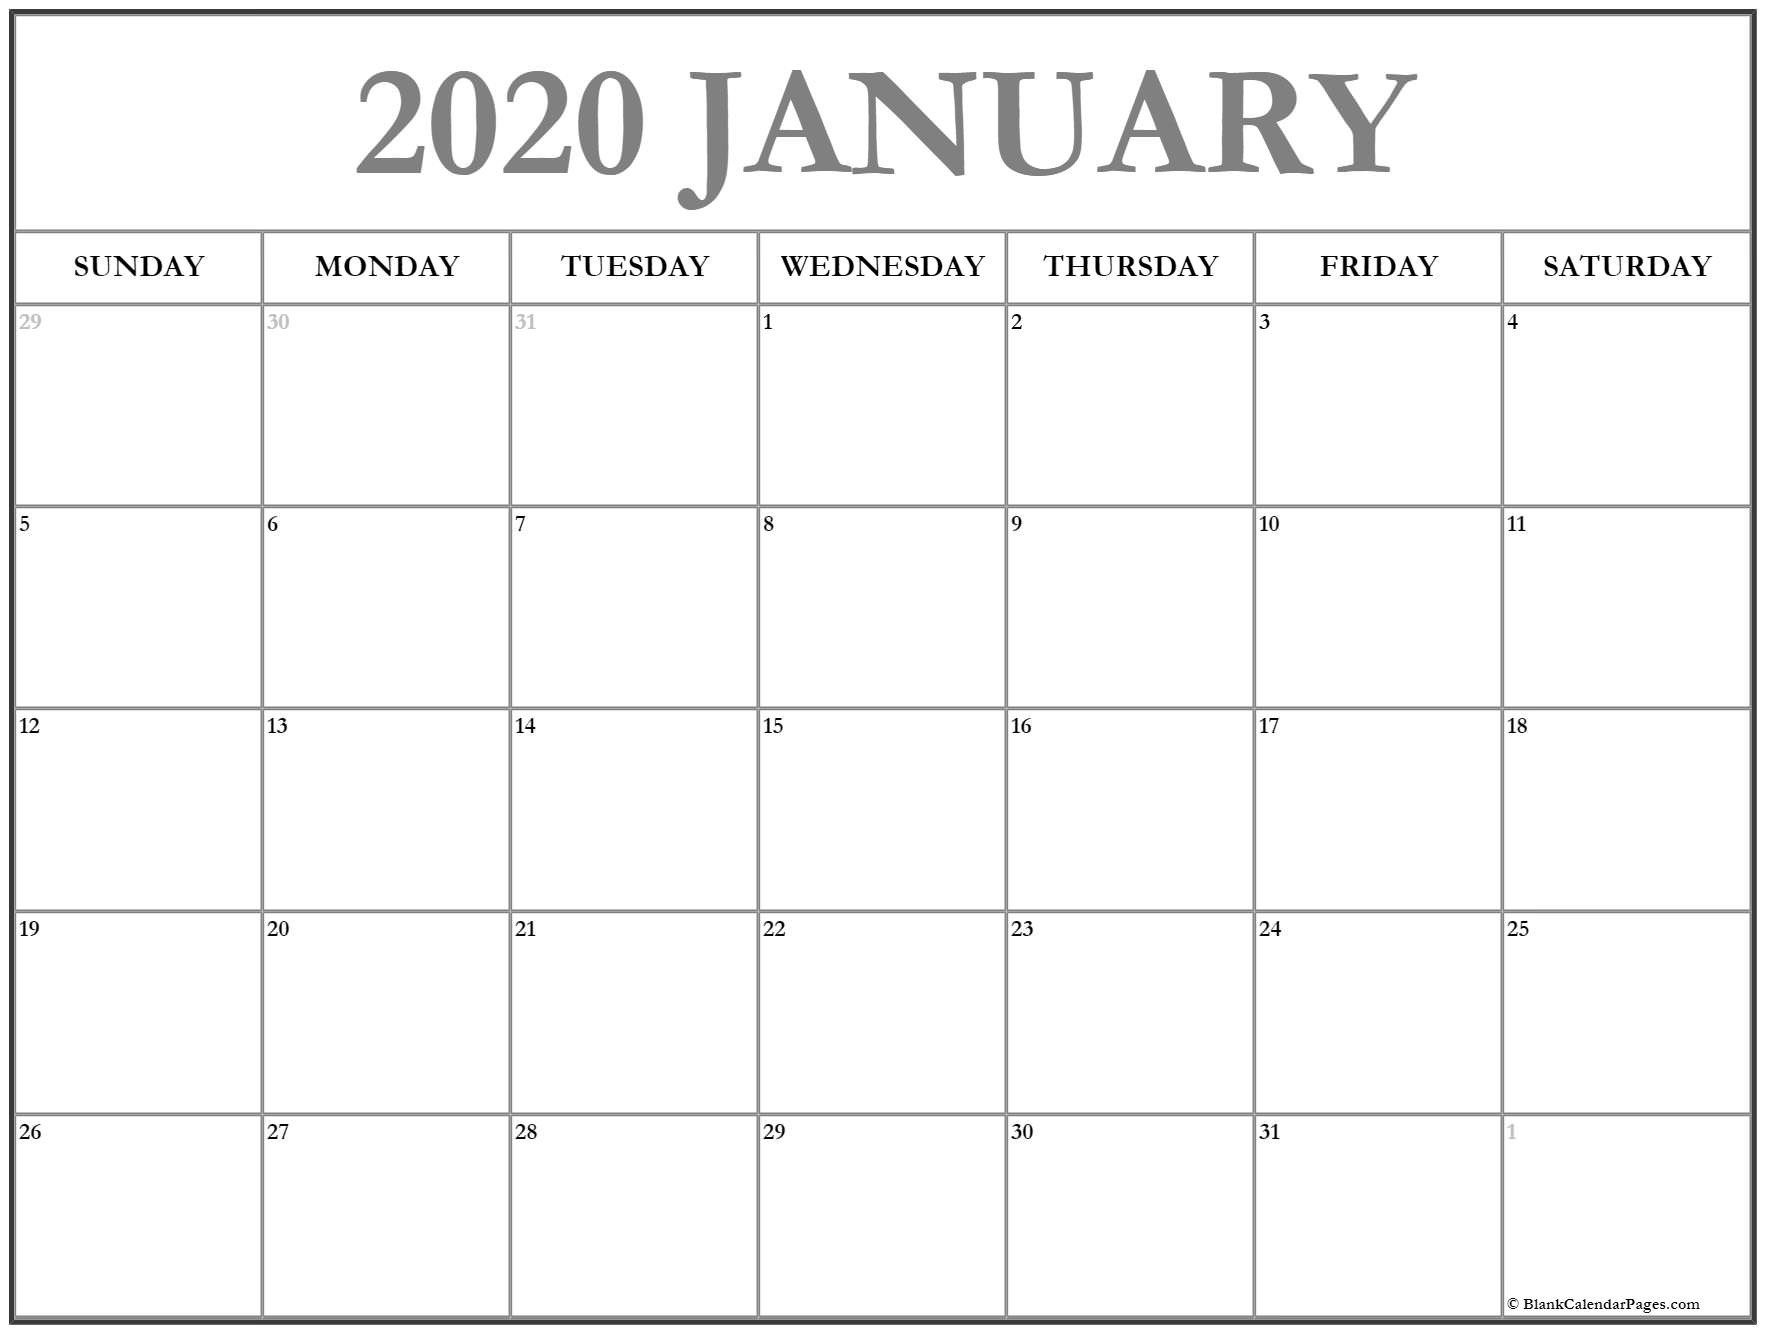 January 2020 Calendar | Free Printable Monthly Calendars  2020 Printable Calendar Free Full Page